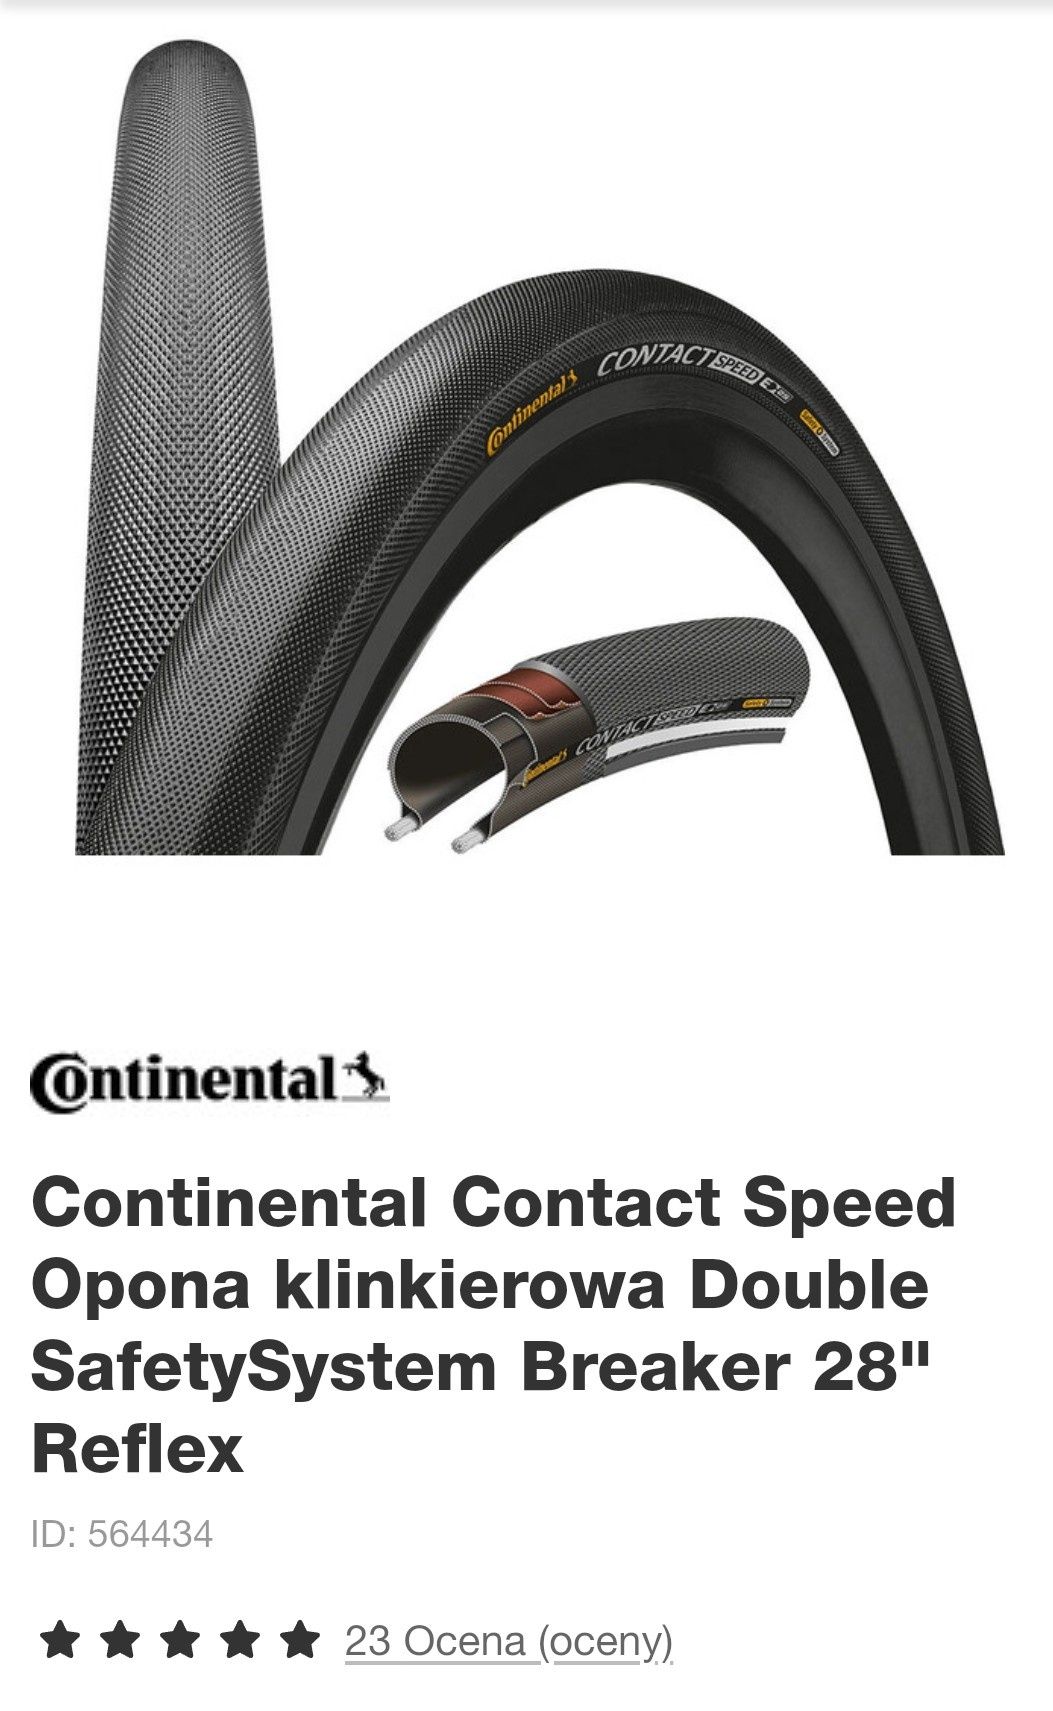 Continental Contact Speed 28", 700x42C, Opona klinkierowa Double Safet